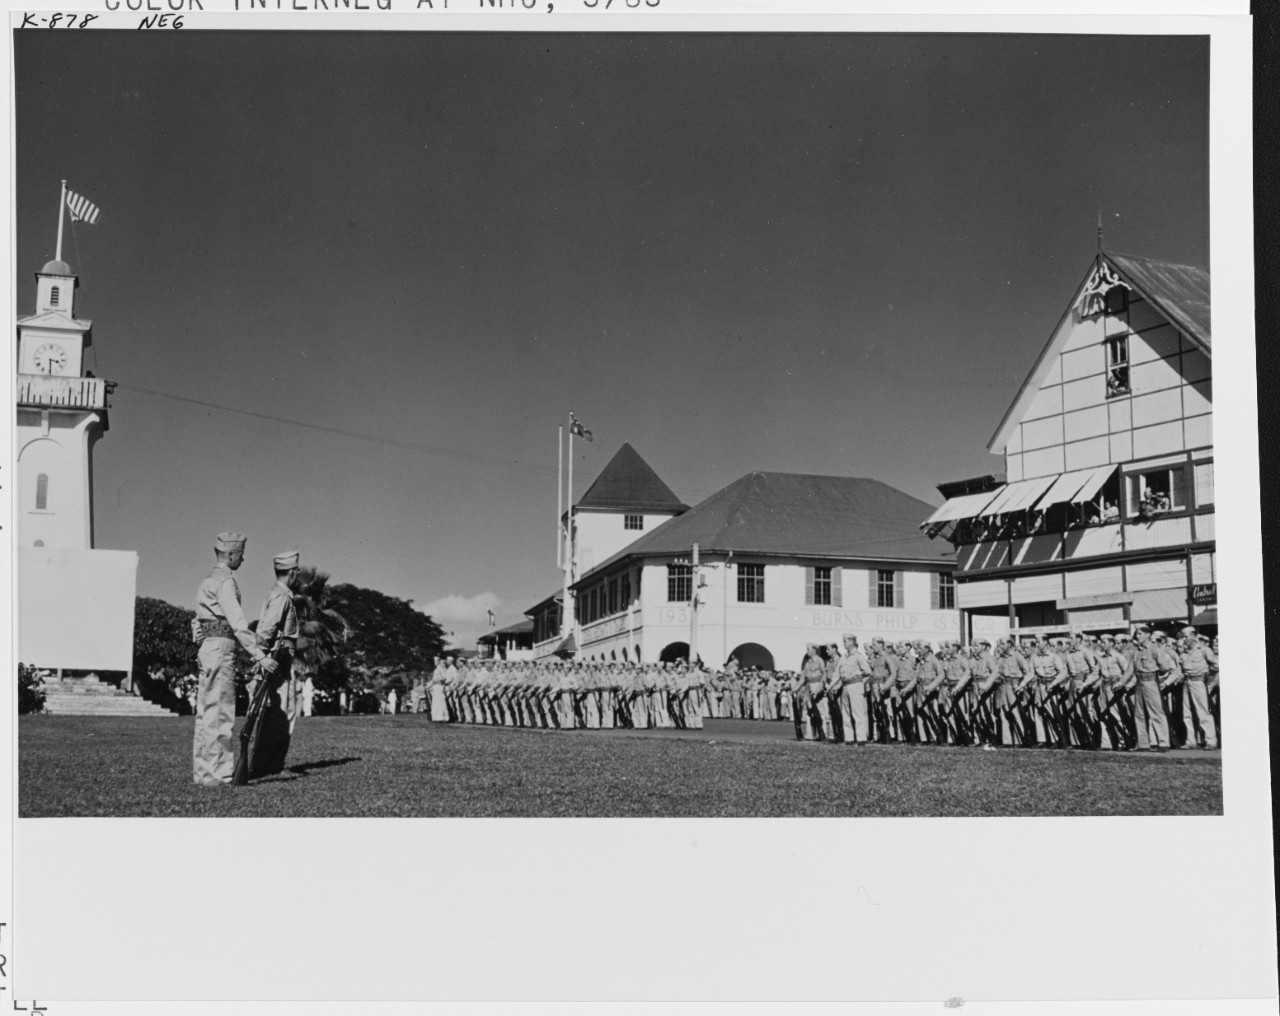 Allies flag day ceremonies, Apia, British Samoa